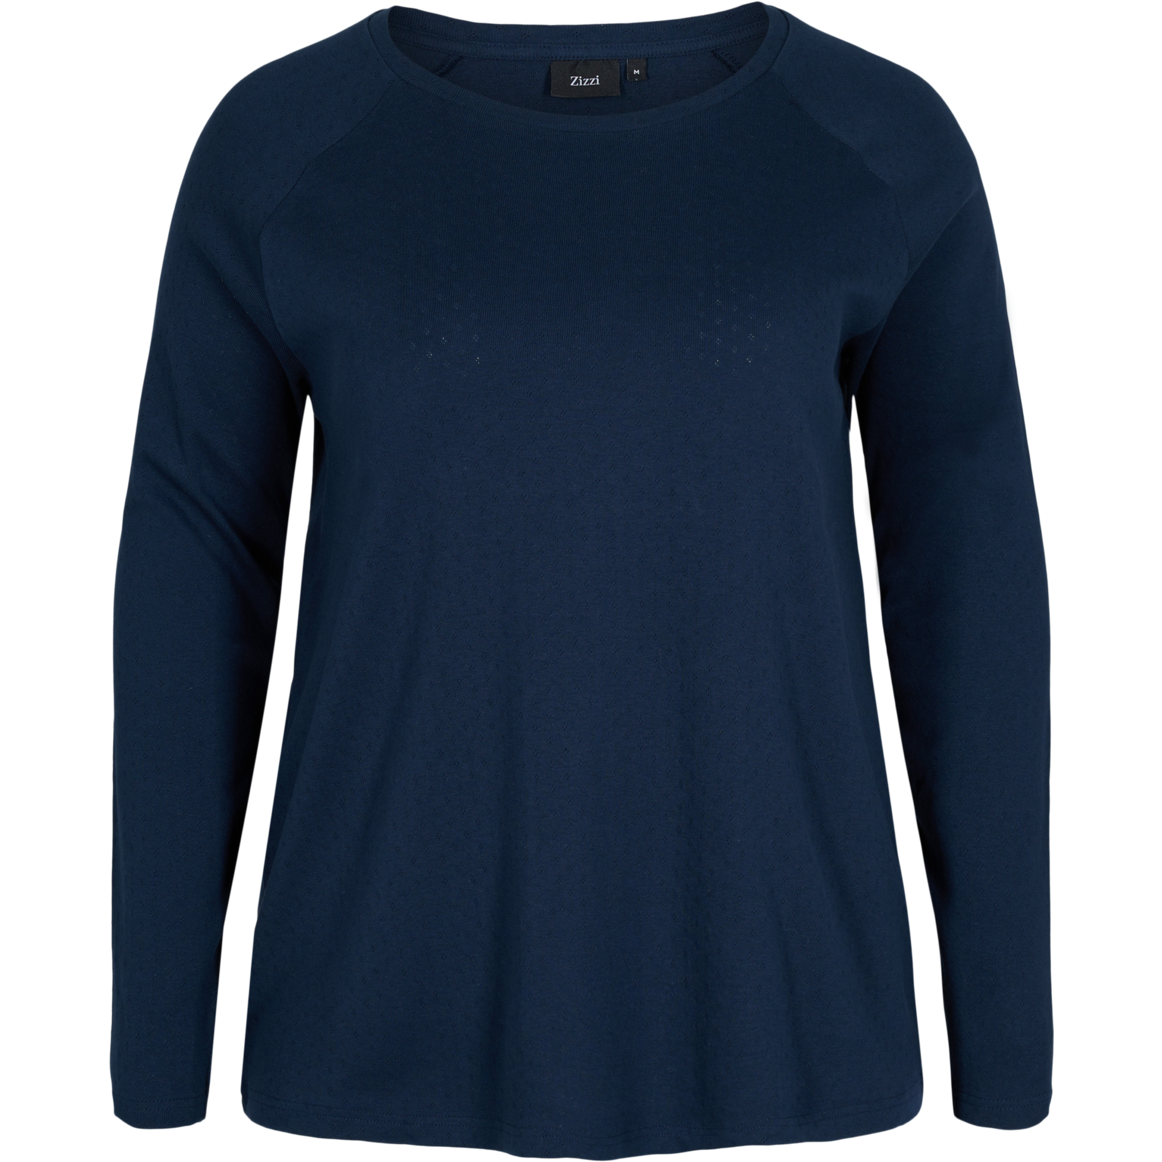 Navy | Sleeve Zizzi Top size in Long Plus Clothing